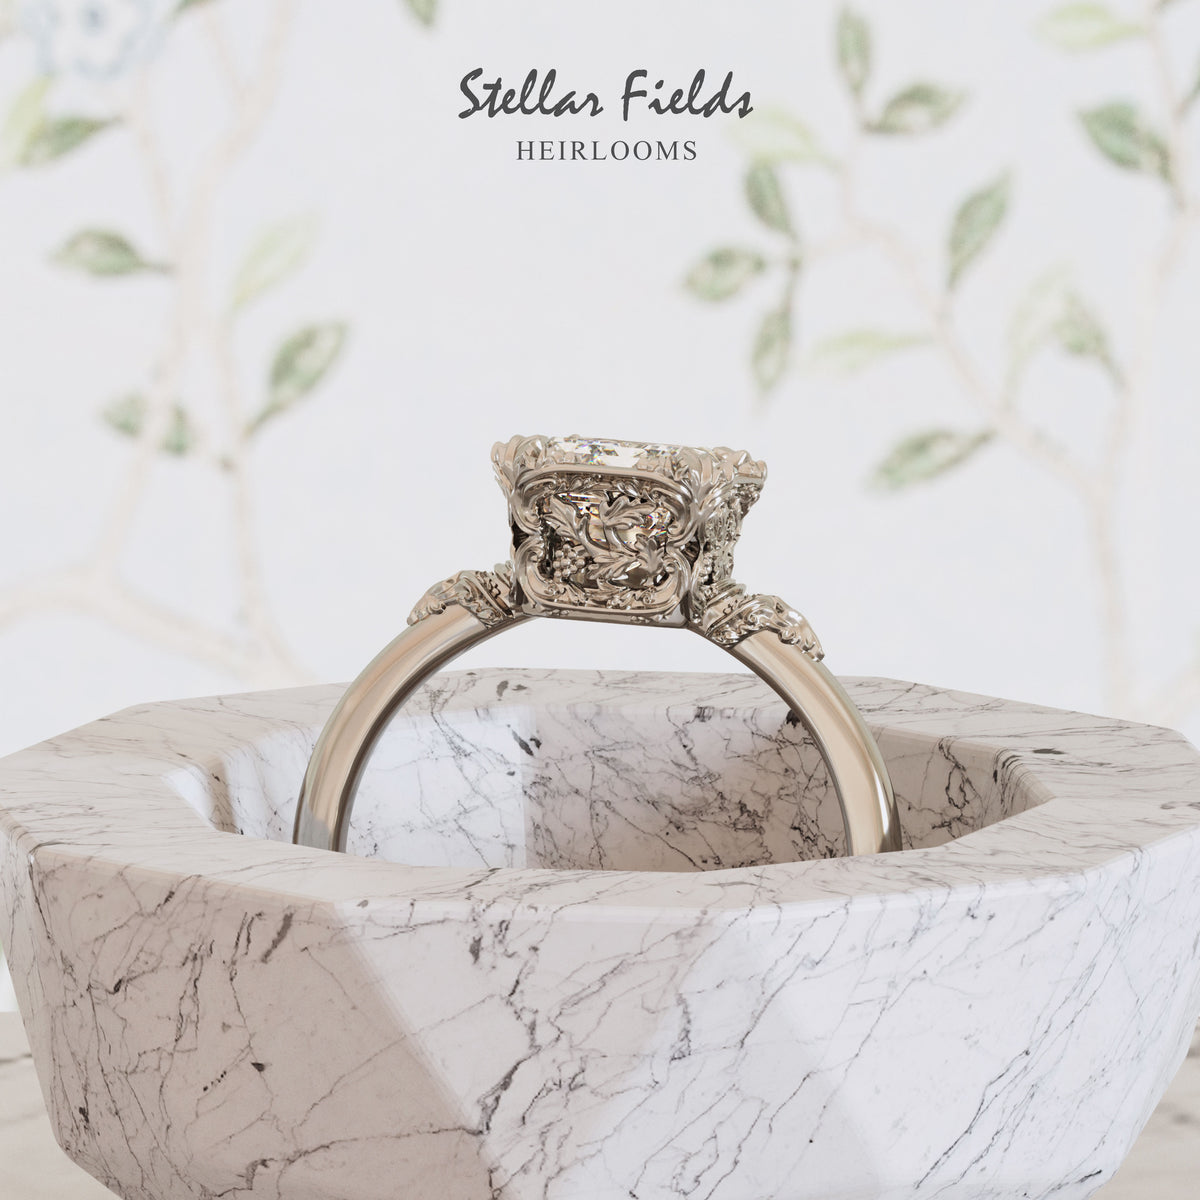 OOAK Engagement Ring 14k White Gold Stellar Fields Jewelry